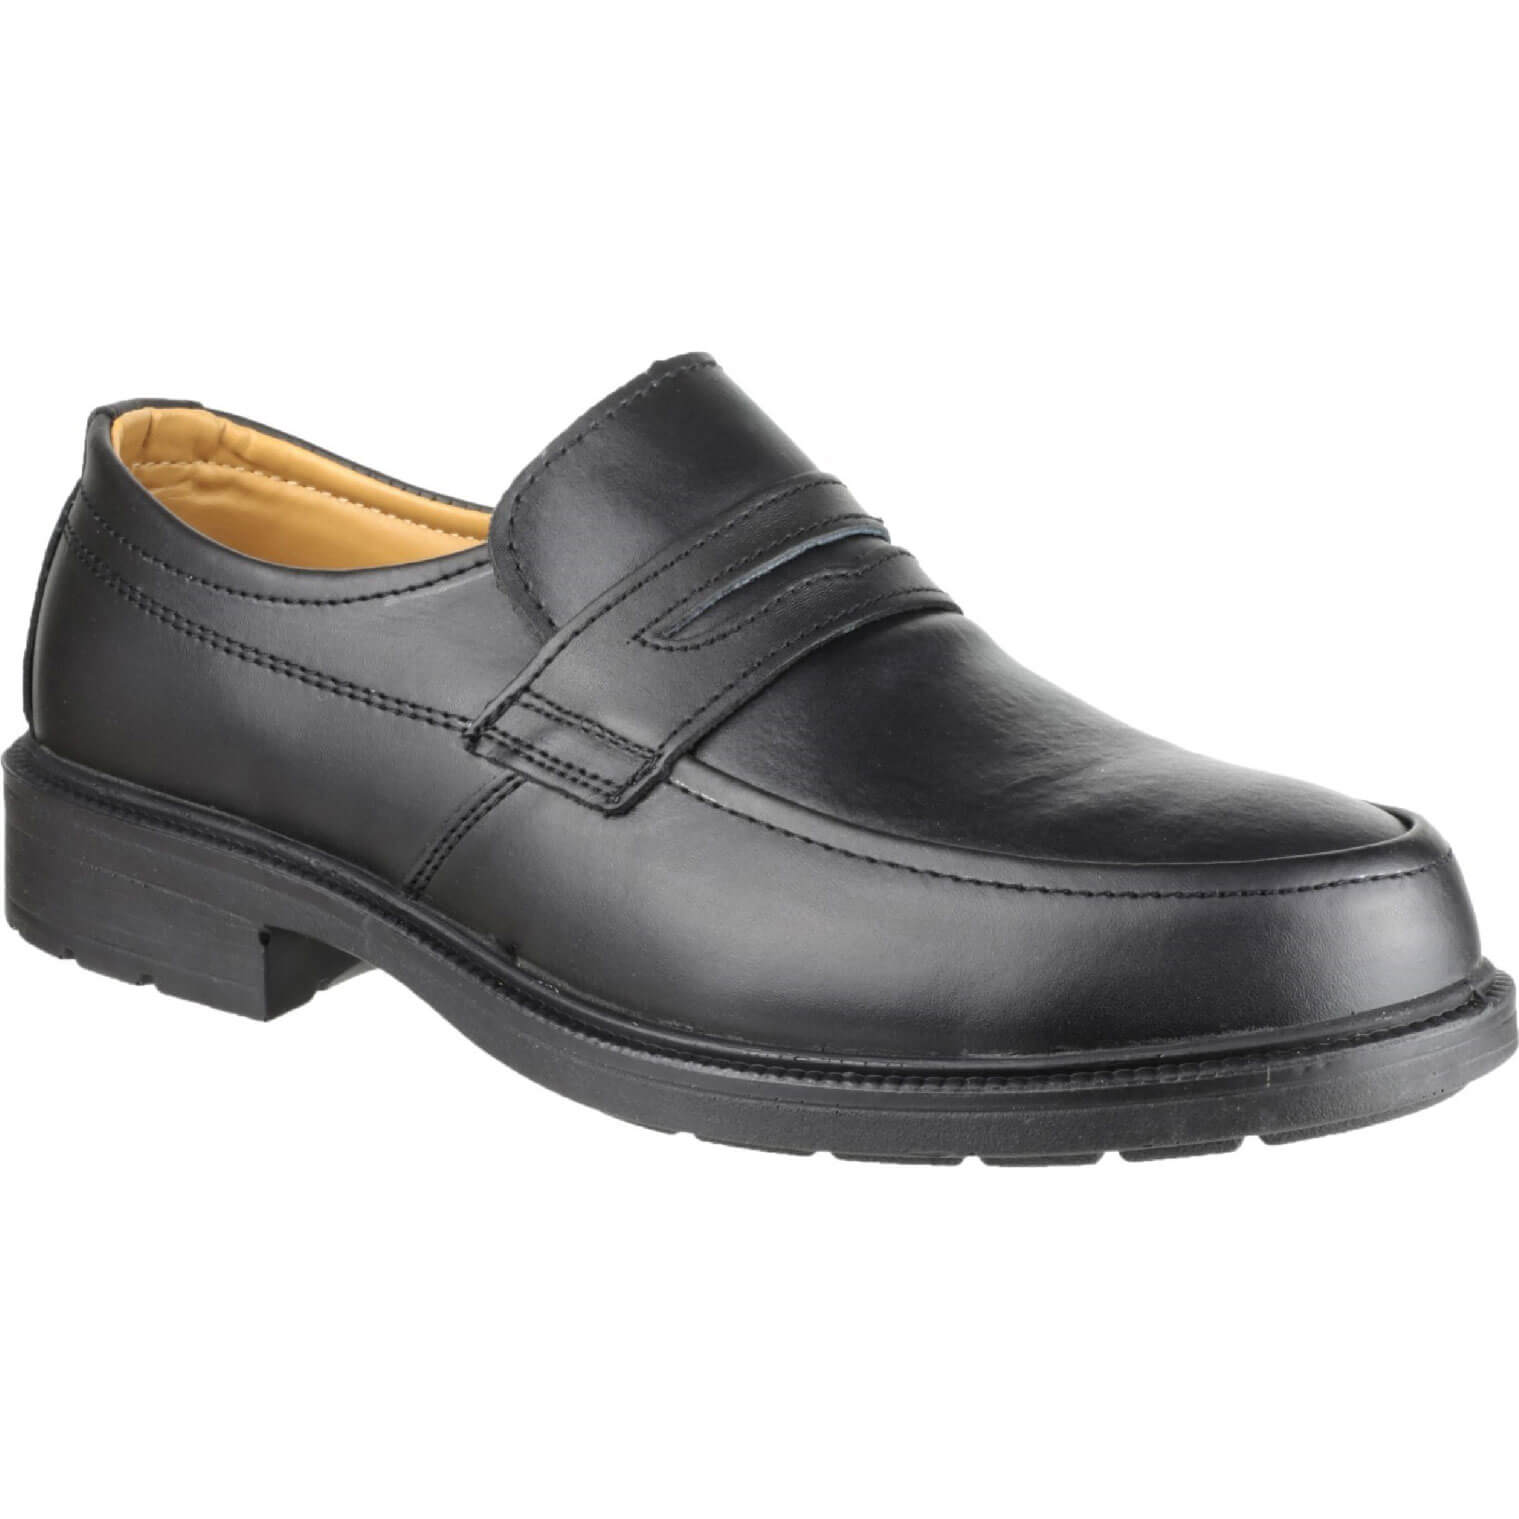 Image of Amblers Safety FS46 Safety Slip On Shoe Black Size 12